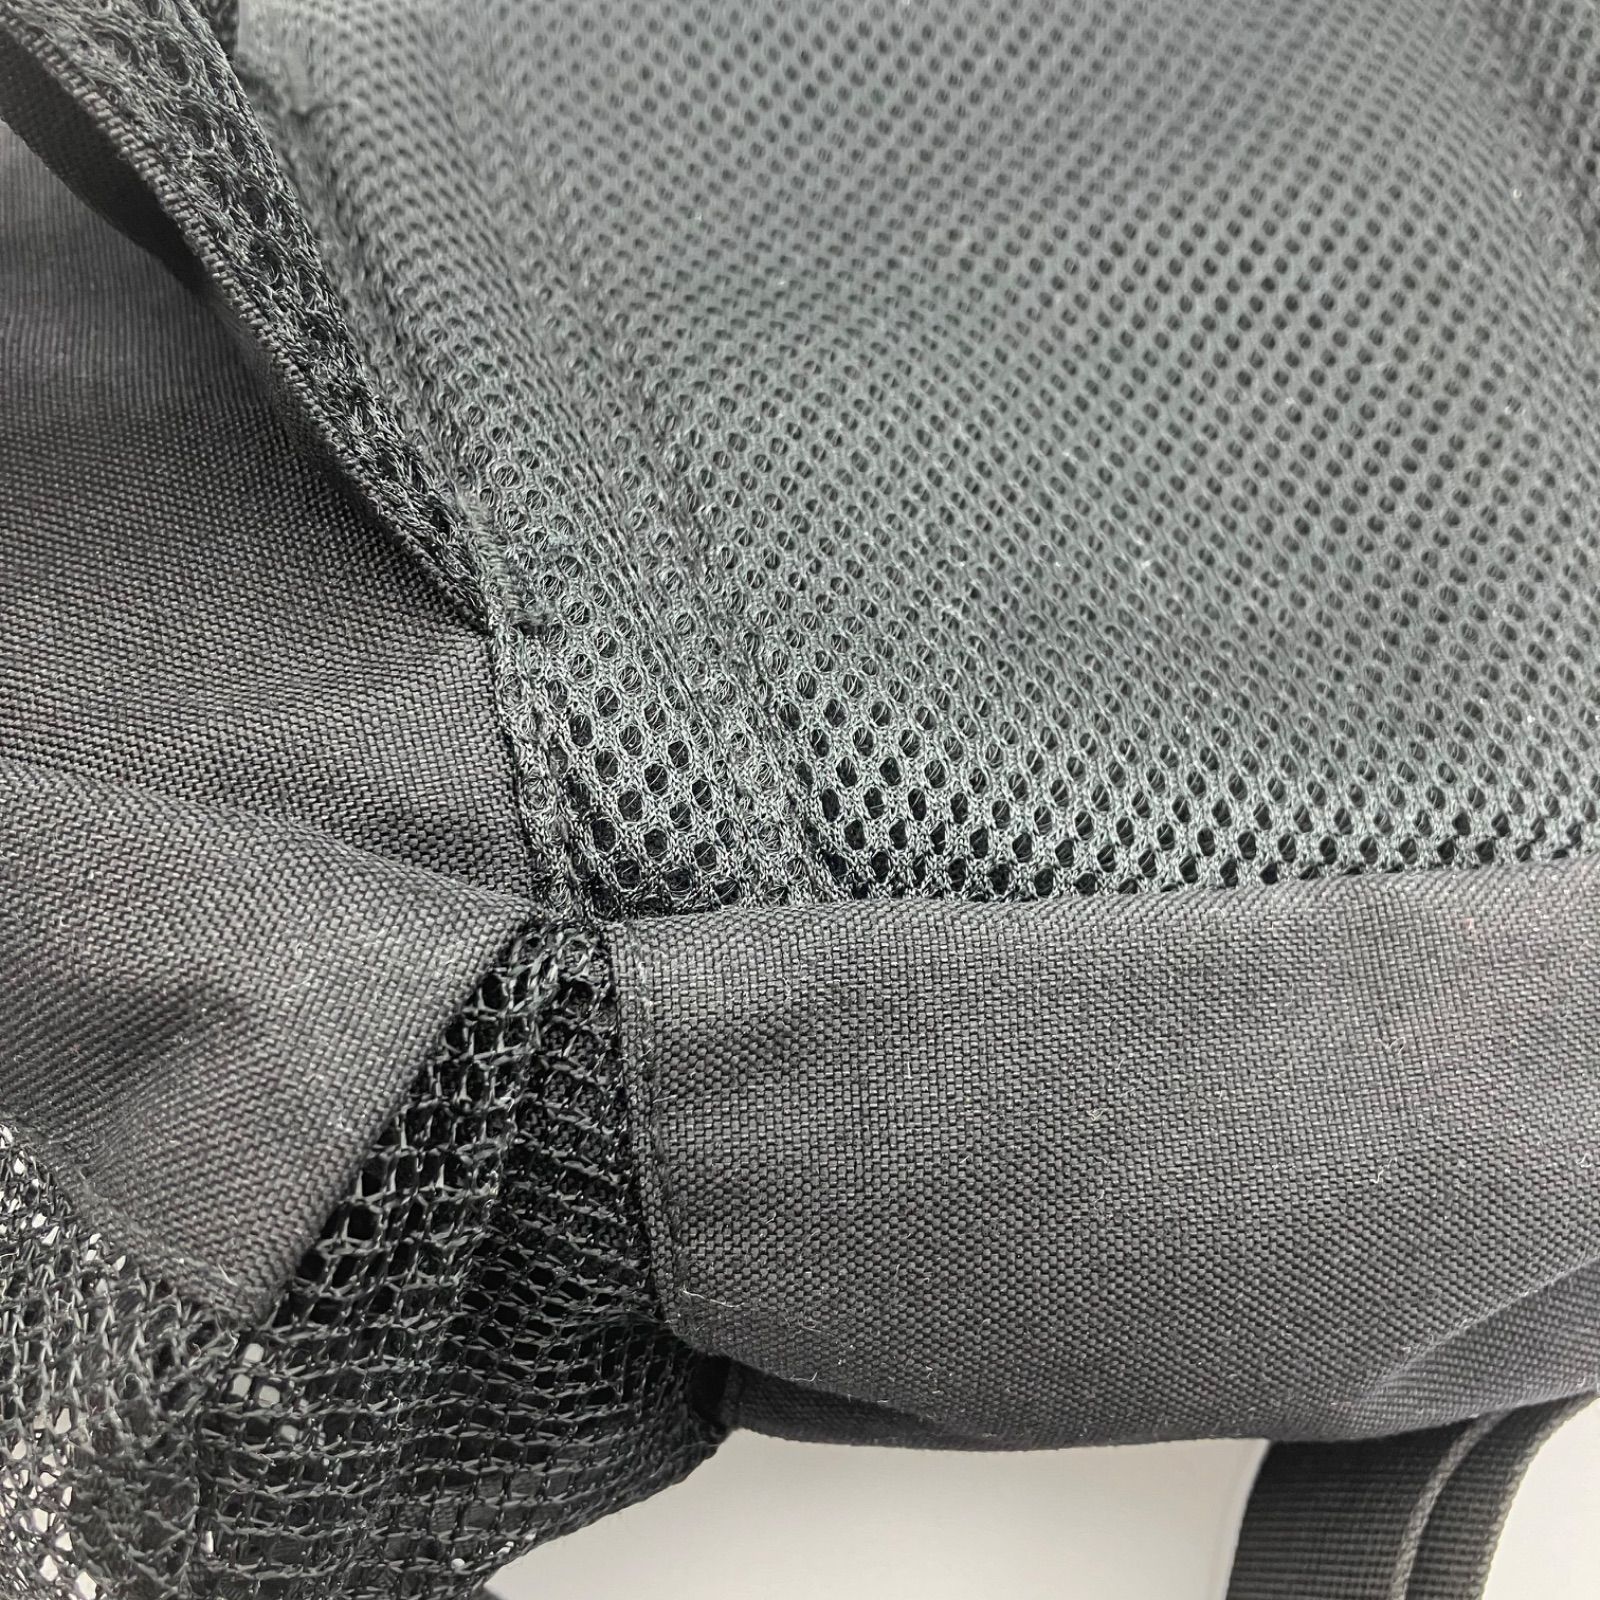 10SS Supreme シュプリーム Waist Bag ウエストバッグ ウエストポーチ コーデュラ ボックスロゴ ブラック 黒 鞄 カバン メンズ レディース SG136-3